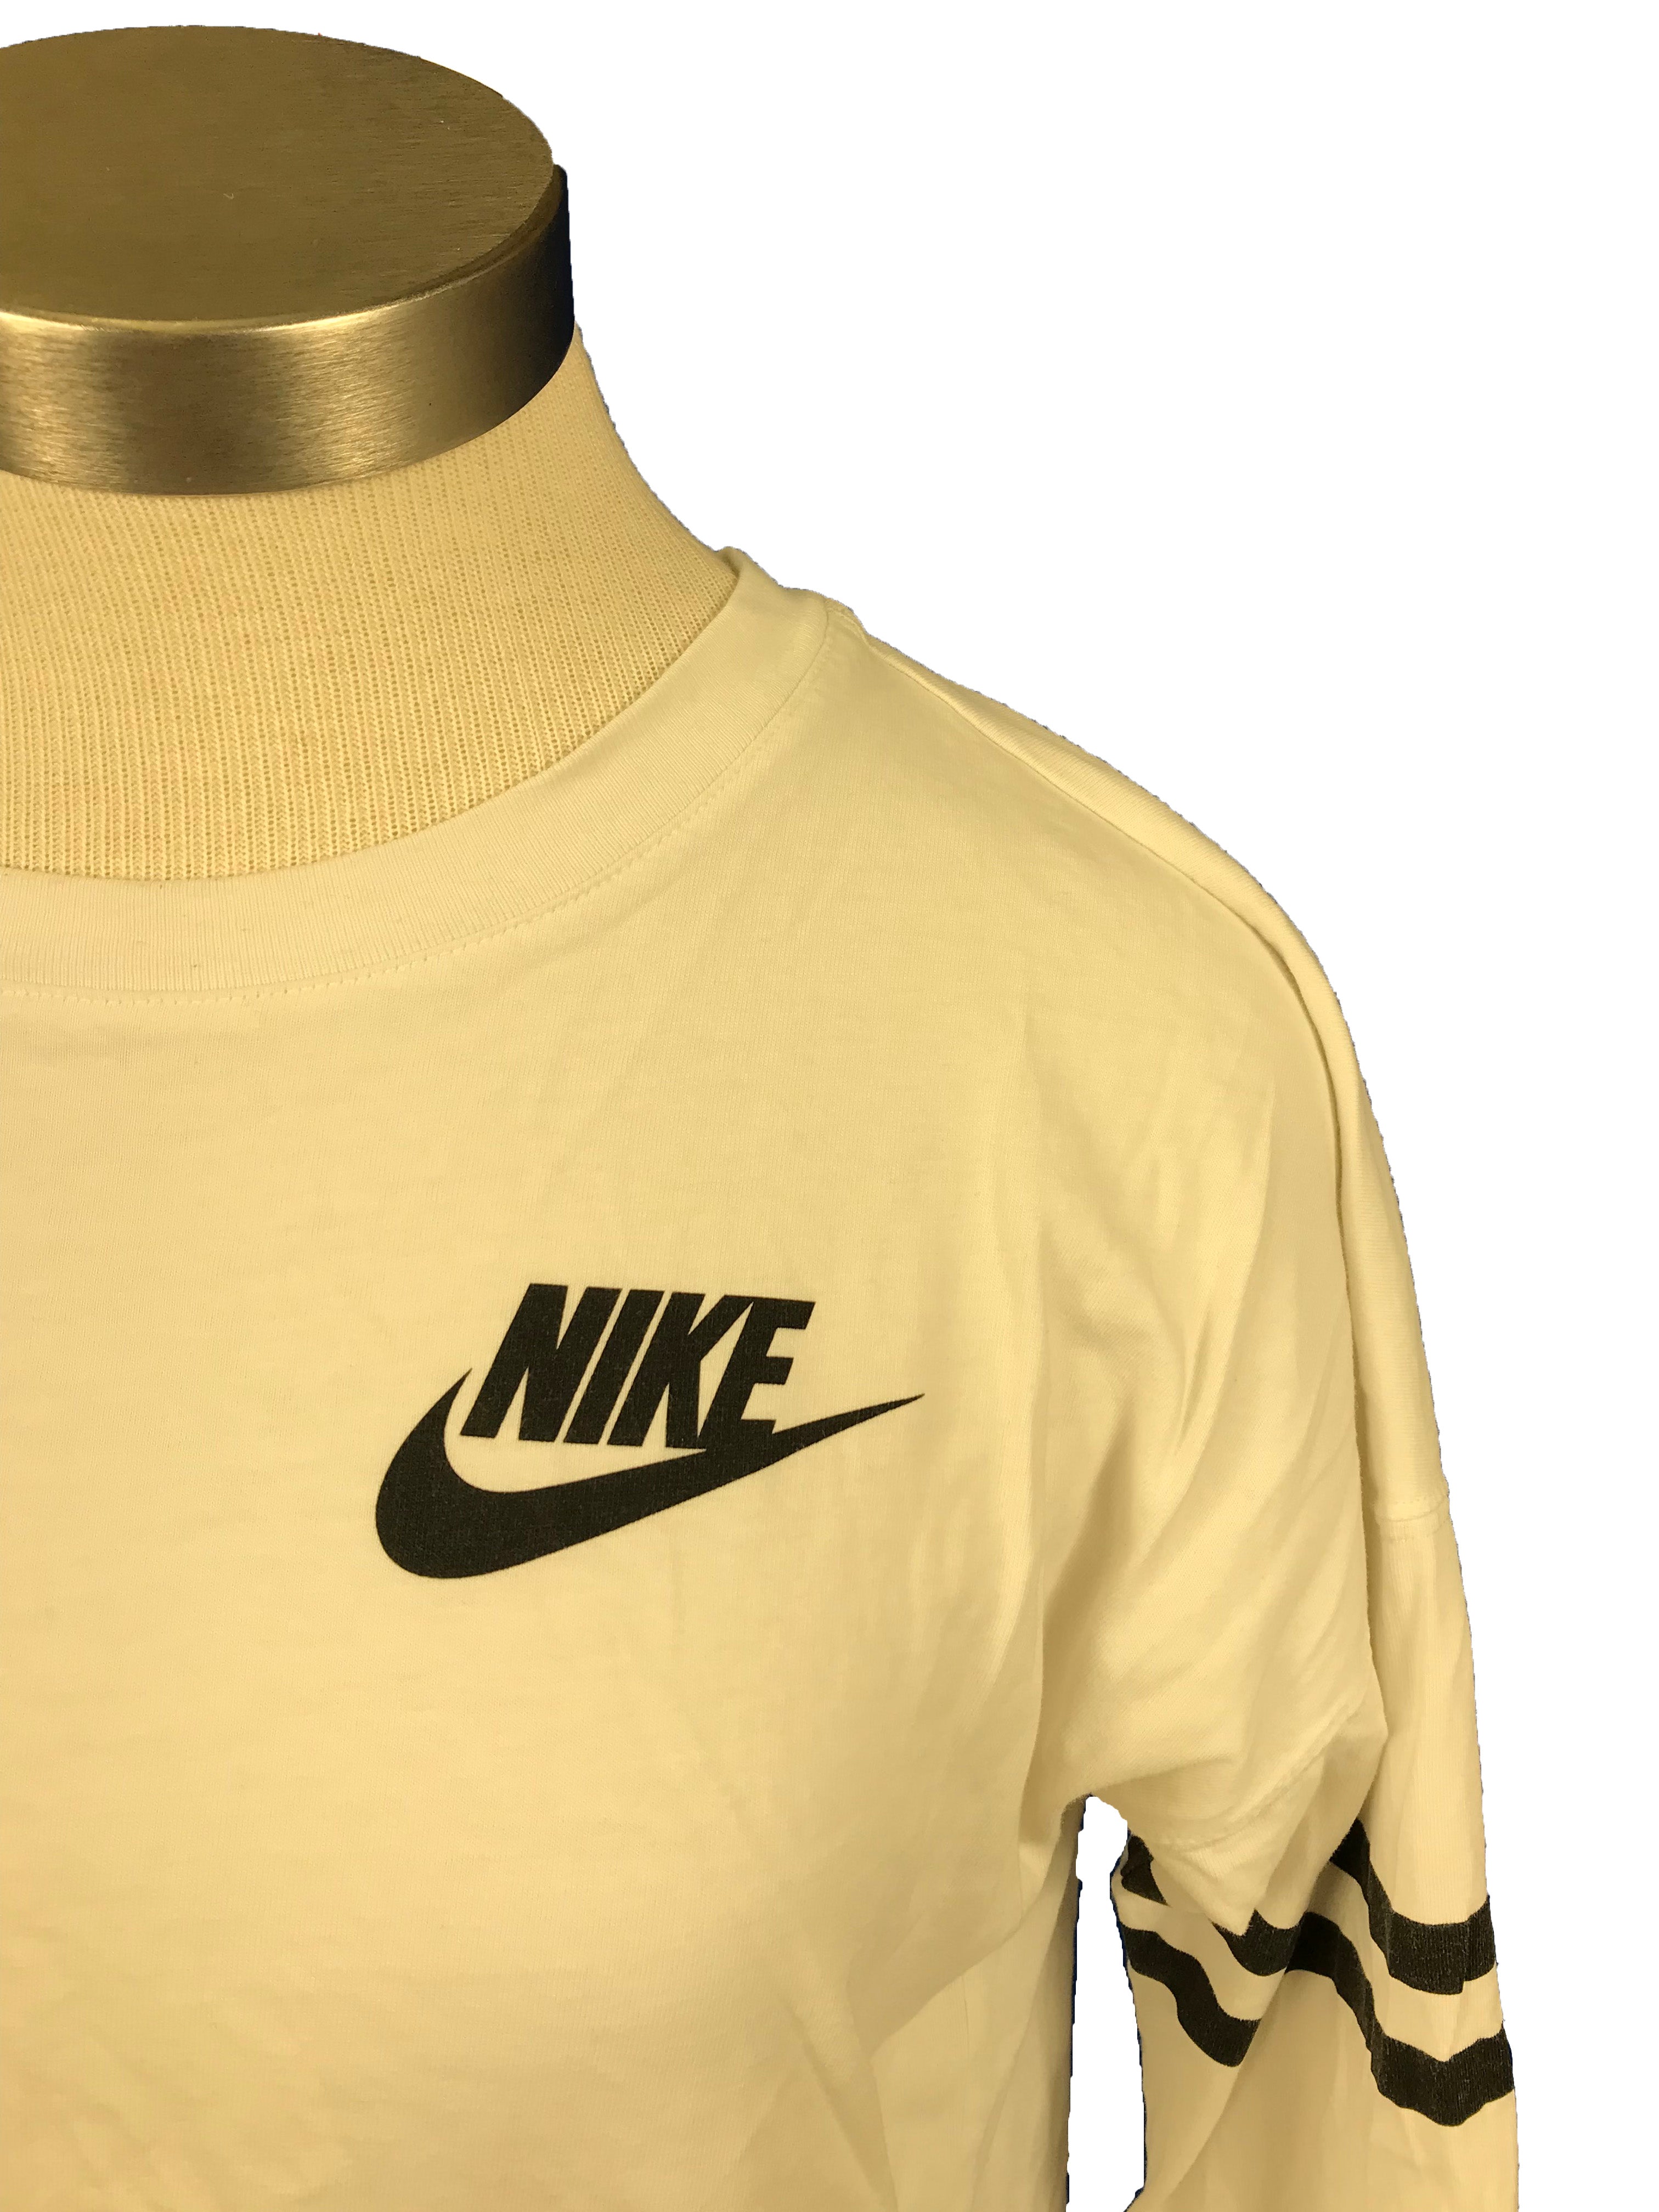 Nike White 3/4 Sleeve T-Shirt Women's Size Medium